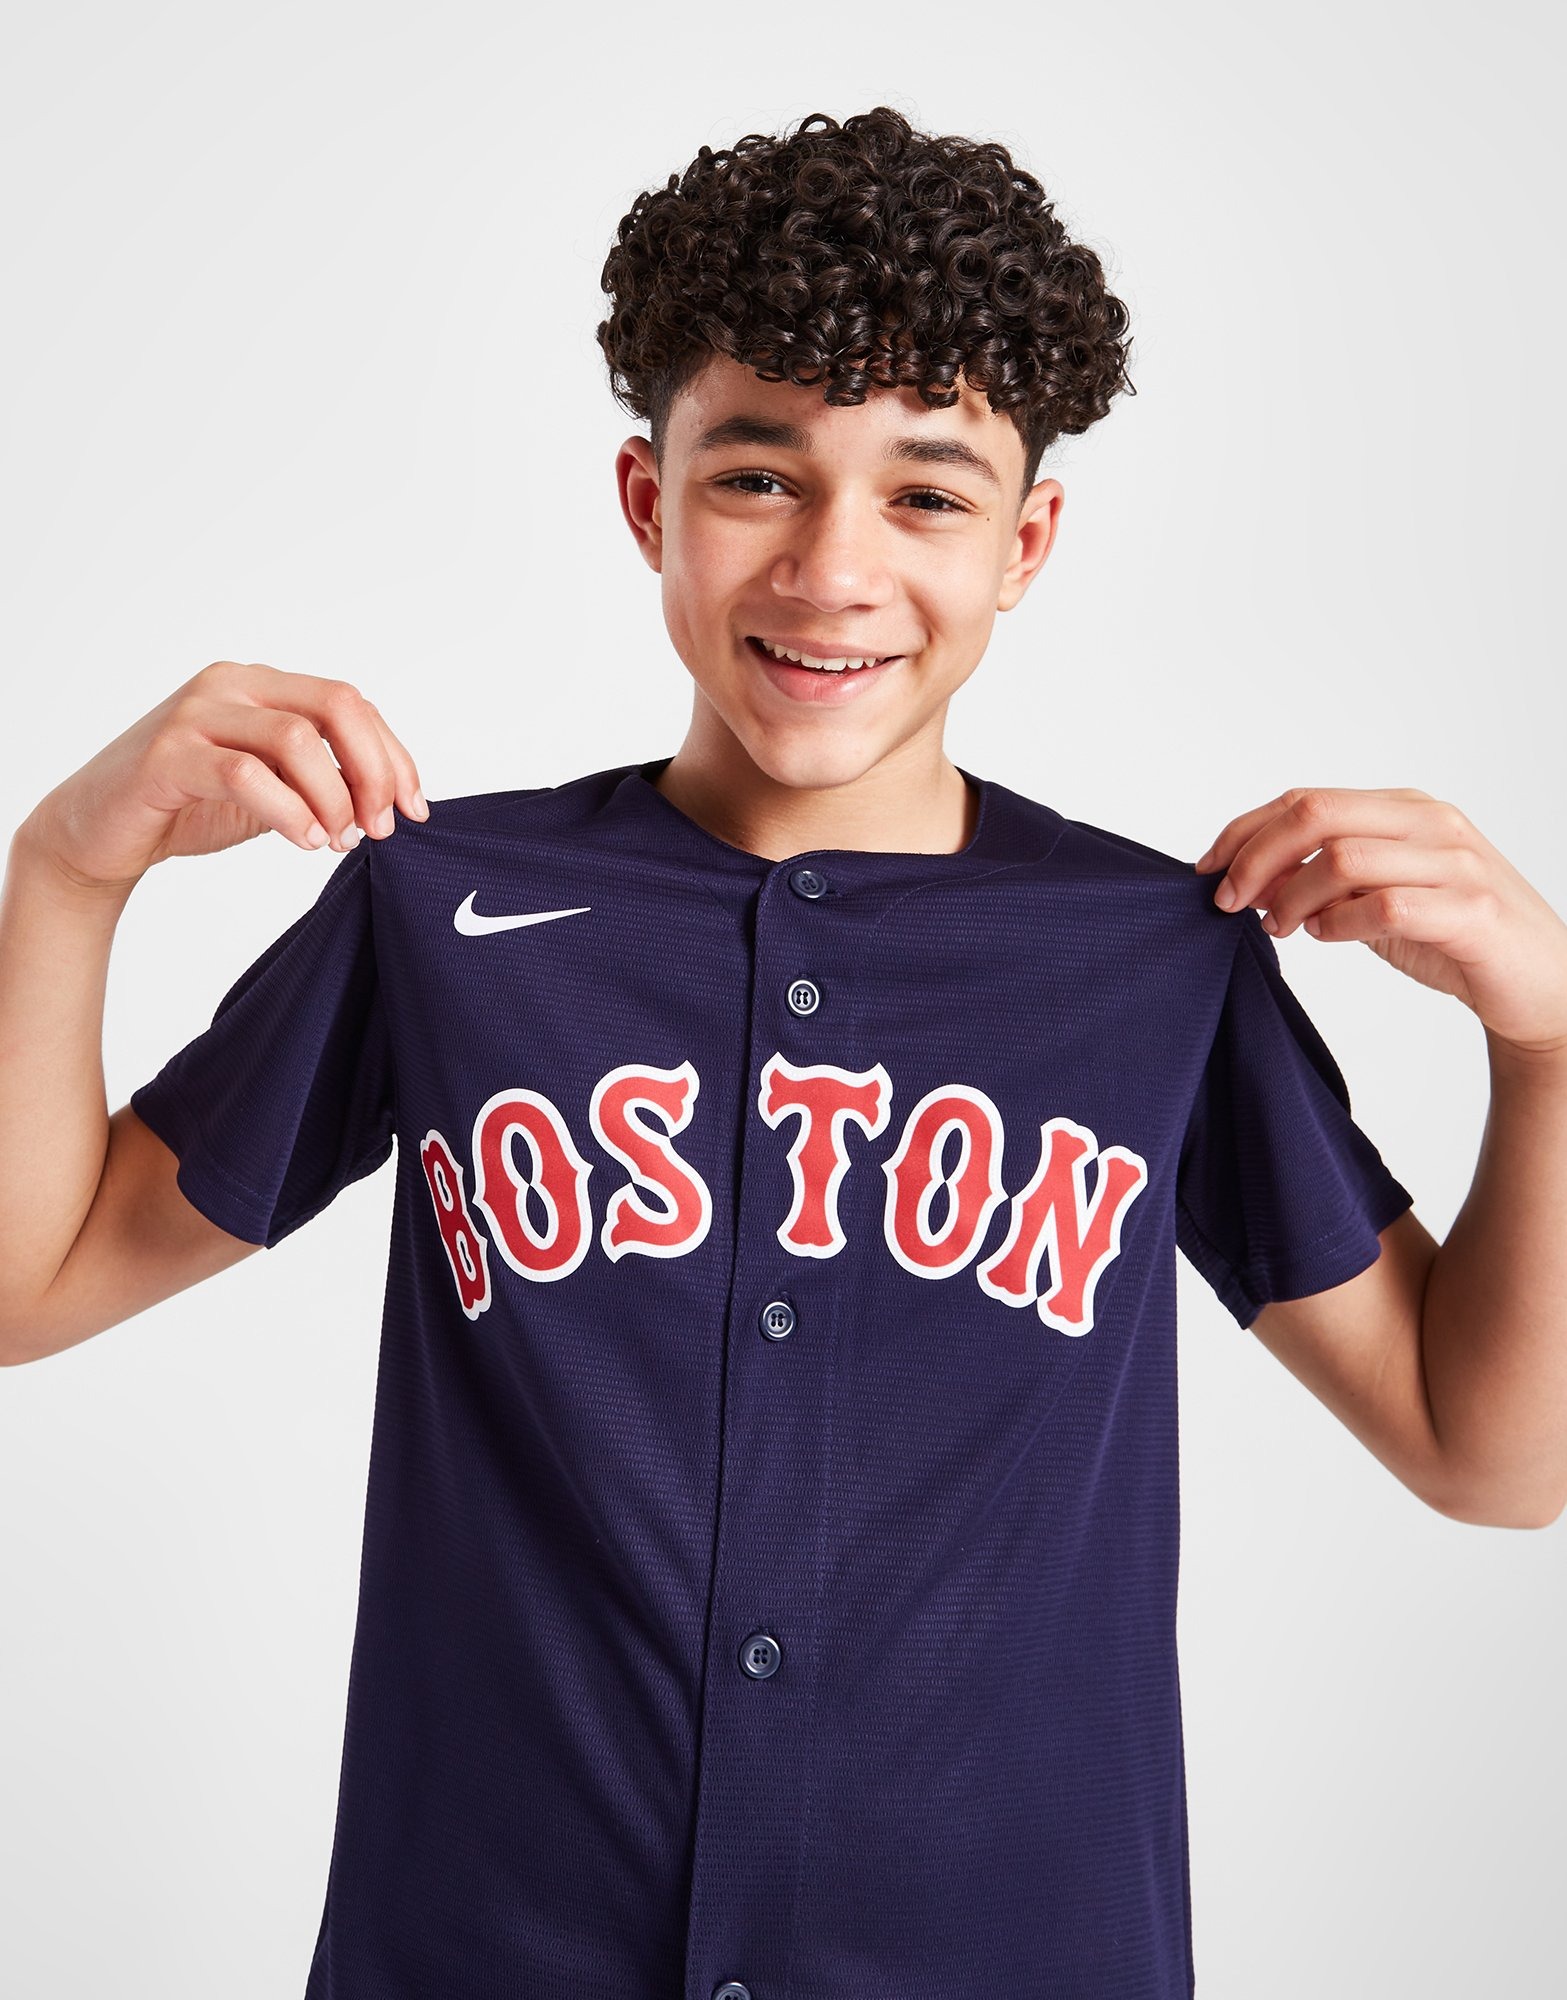 Nike Men's Nike Red Boston Sox Alternate Authentic Team Jersey